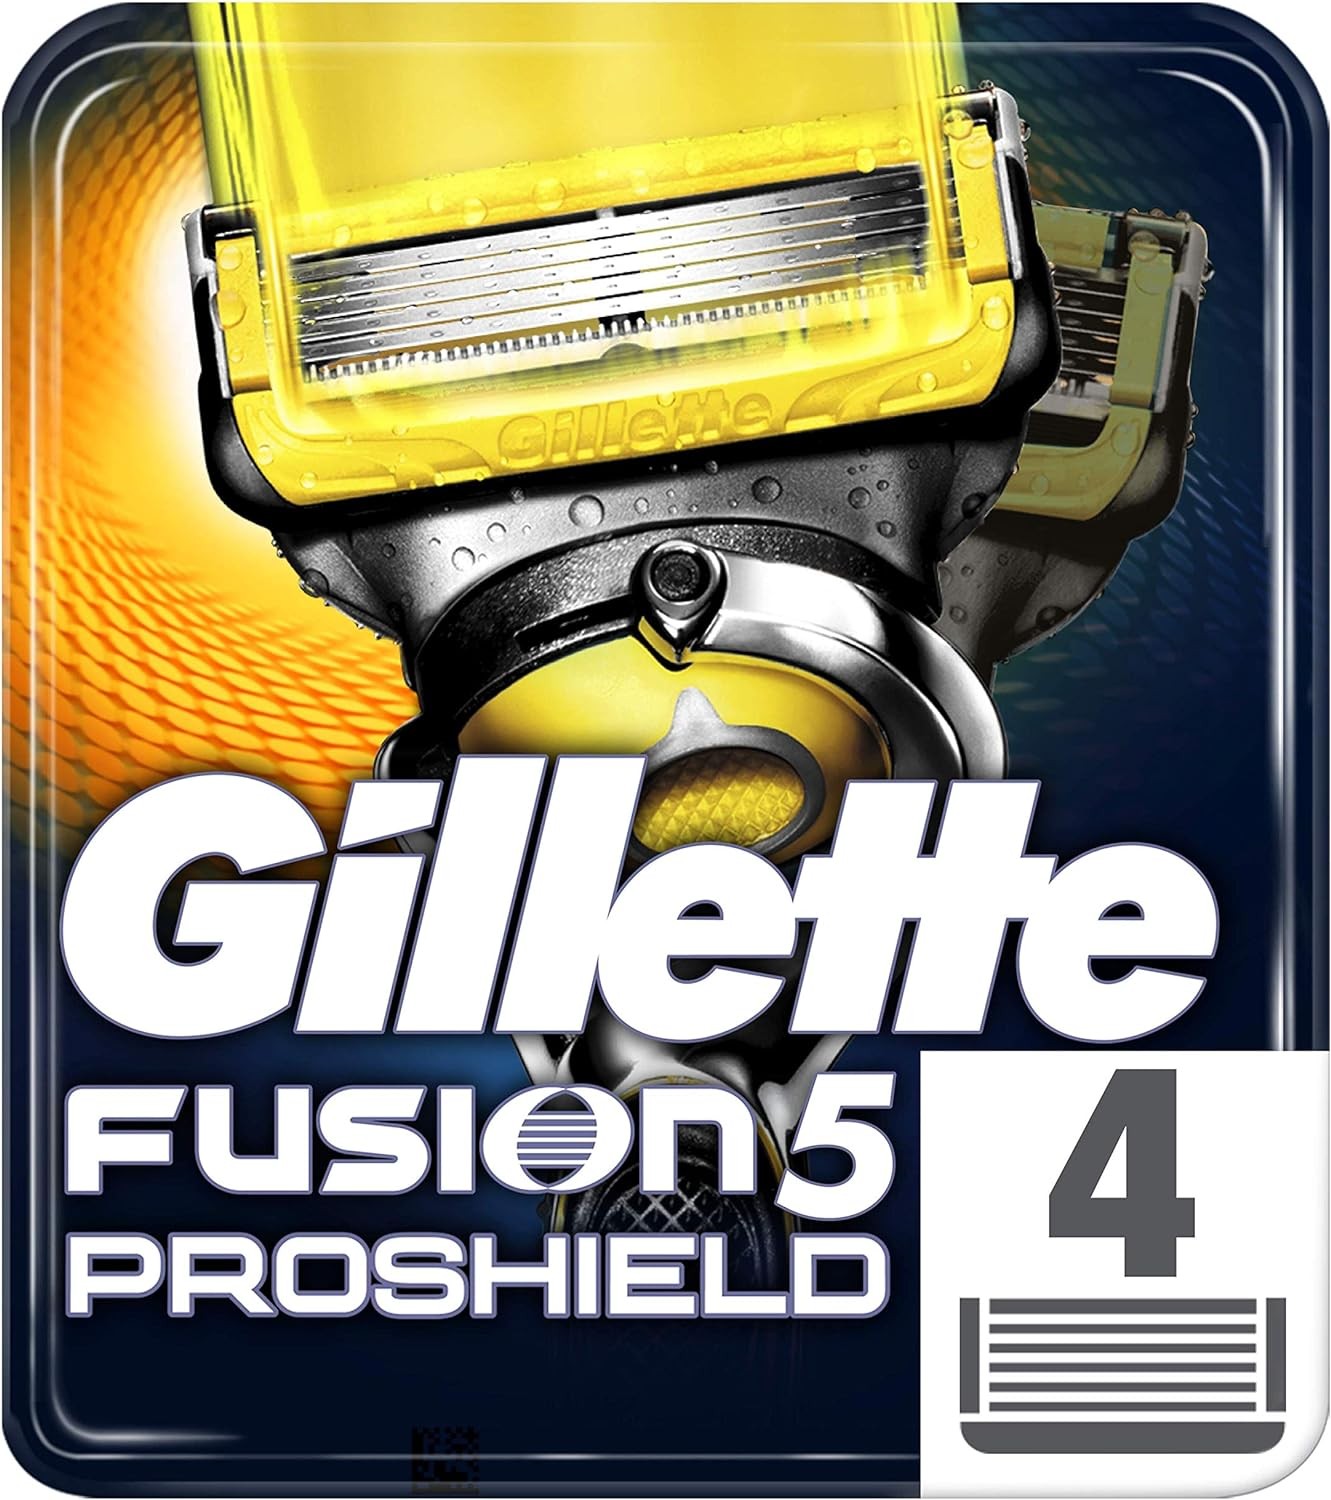 Gillette Fusion 5 Pro Shield Razor Blades with 4 Cartridges